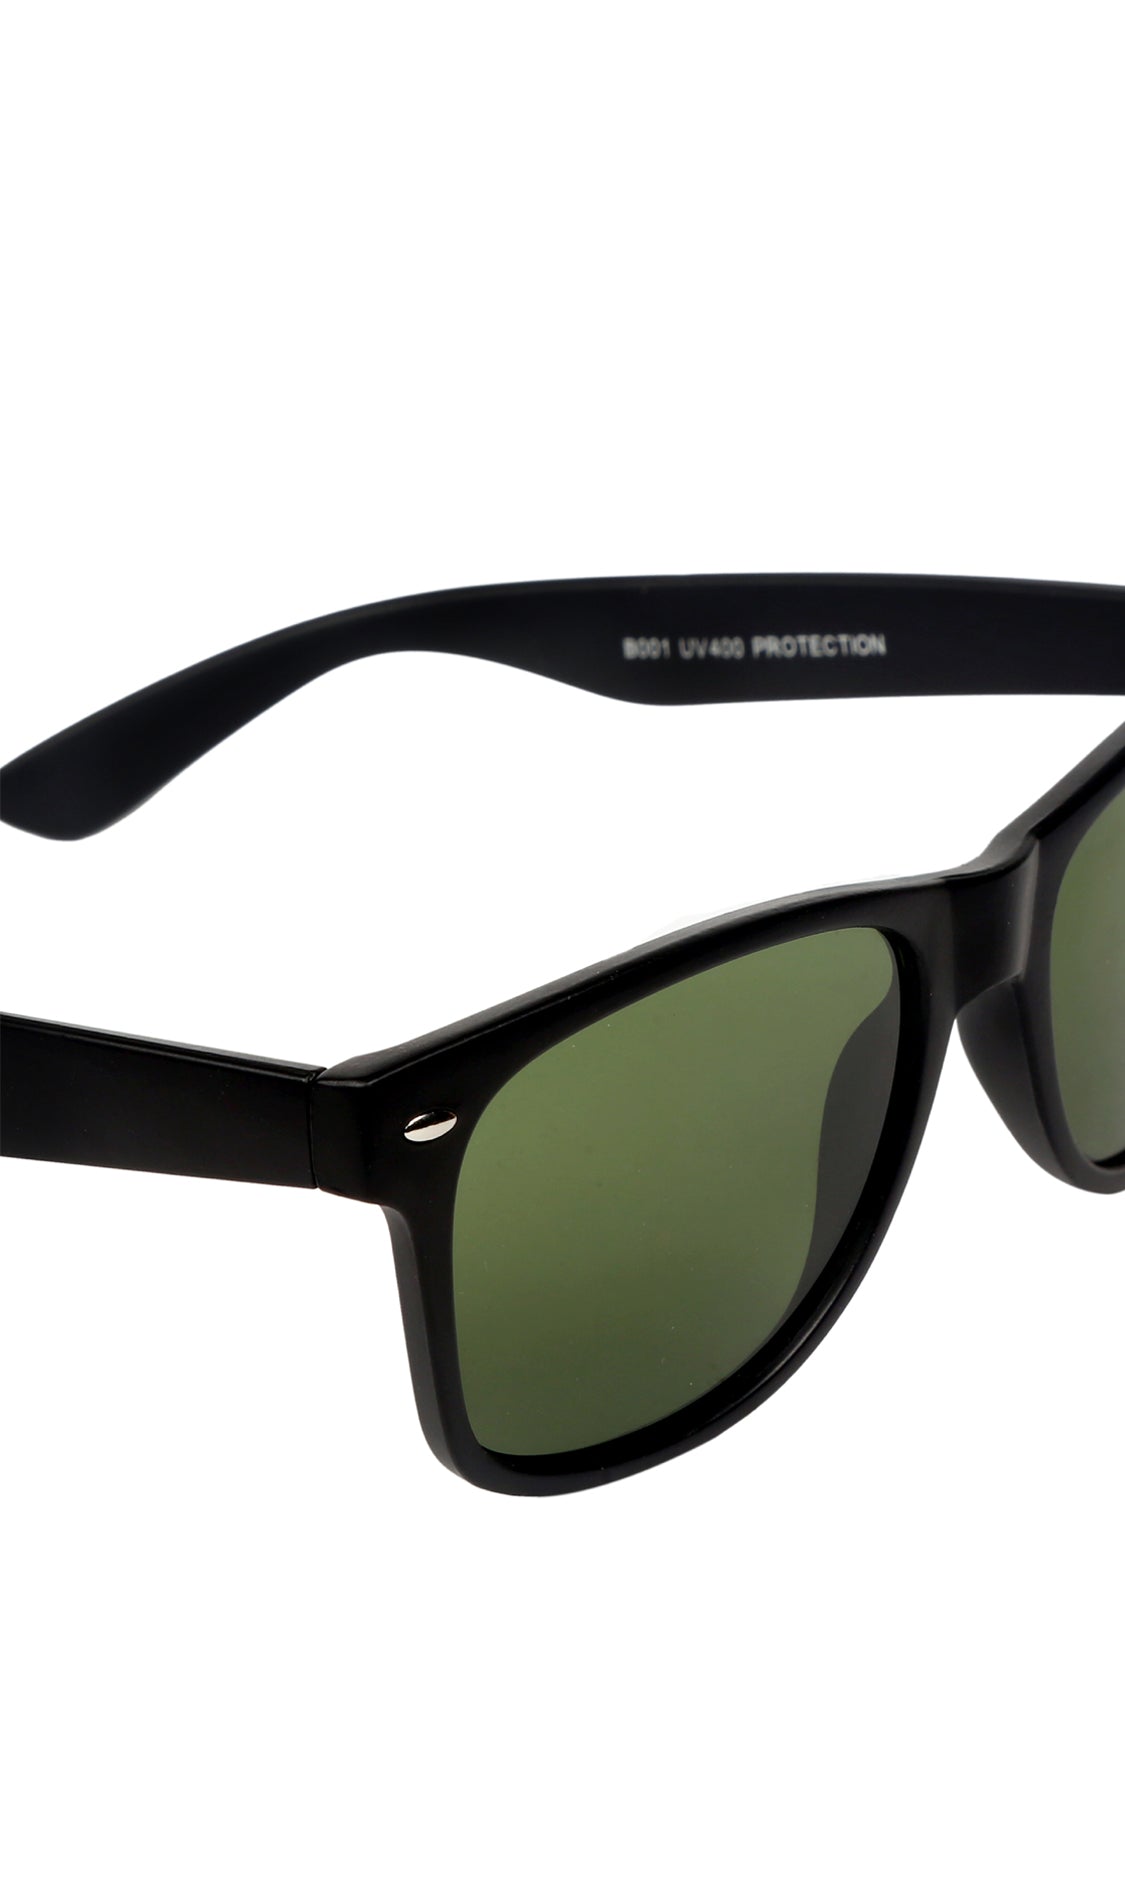 Jodykoes® Stylish Looking Fashionable UV Protection Sunglasses Wayfare Shape Eyeshades For Men and Women (Green) - Jodykoes ®